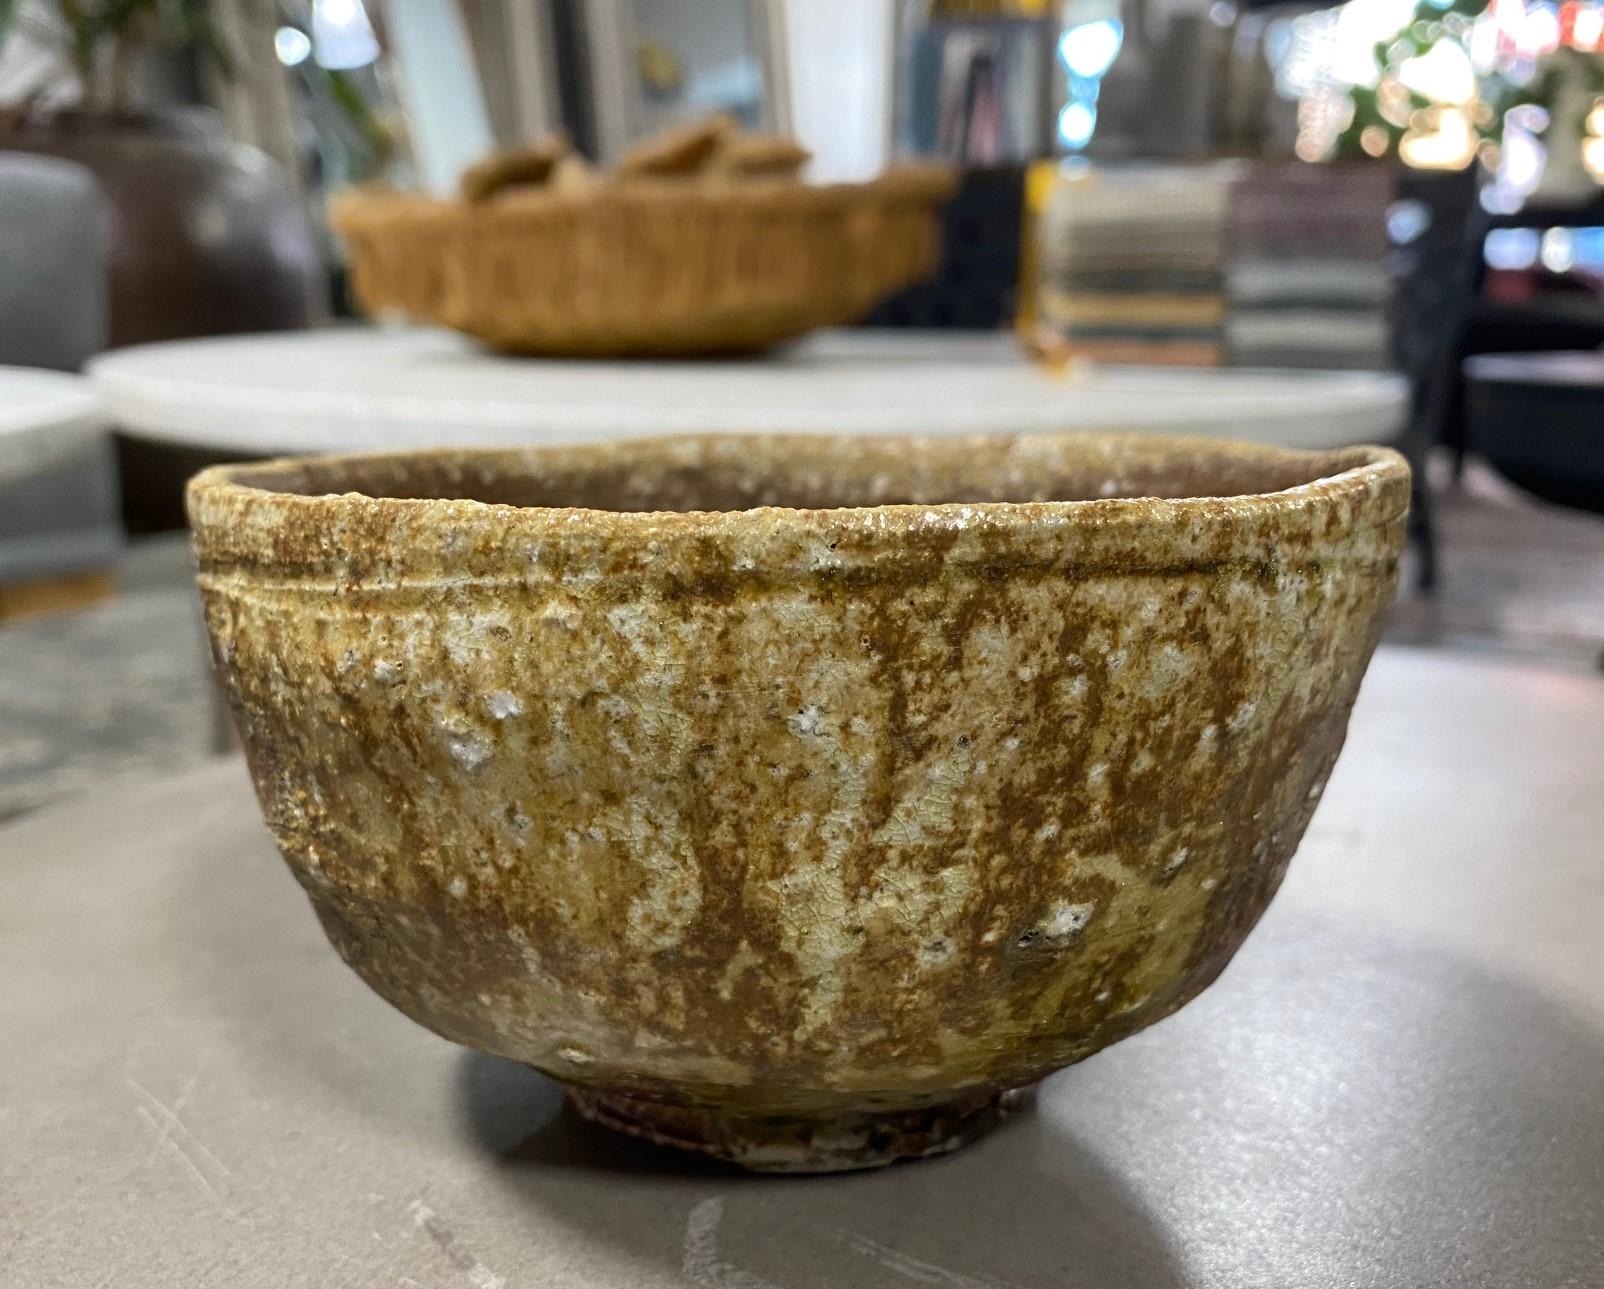 A stunning Shigaraki ware pottery chawan tea bowl by famed Japanese master potter the 3rd Rakusai Takahashi. The bowl features a beautiful, unique natural organic ash glaze with wonderful shifts in colour and texture. 

Rakusai Takahashi III